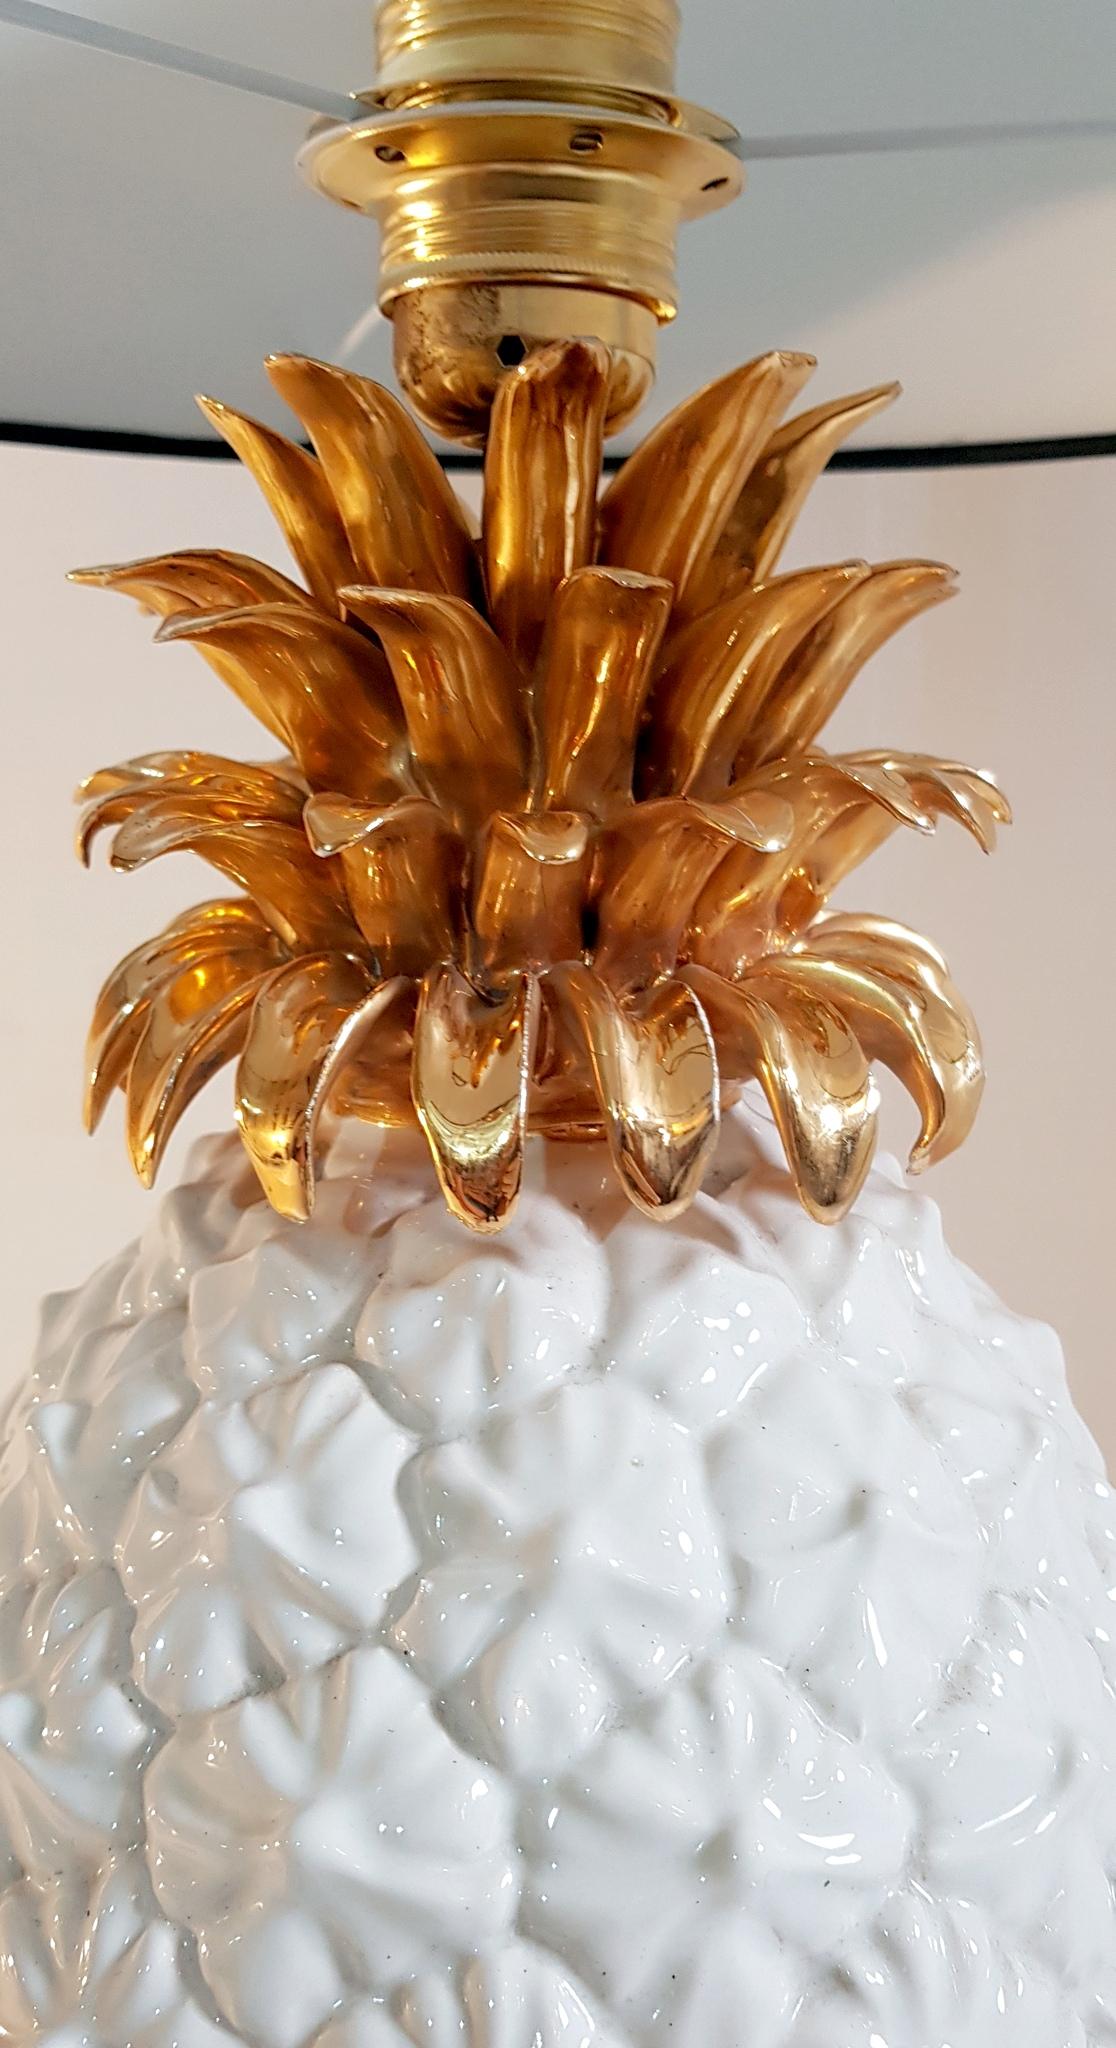 Italian Ceramic Pineapple Table Lamp Made in Italy